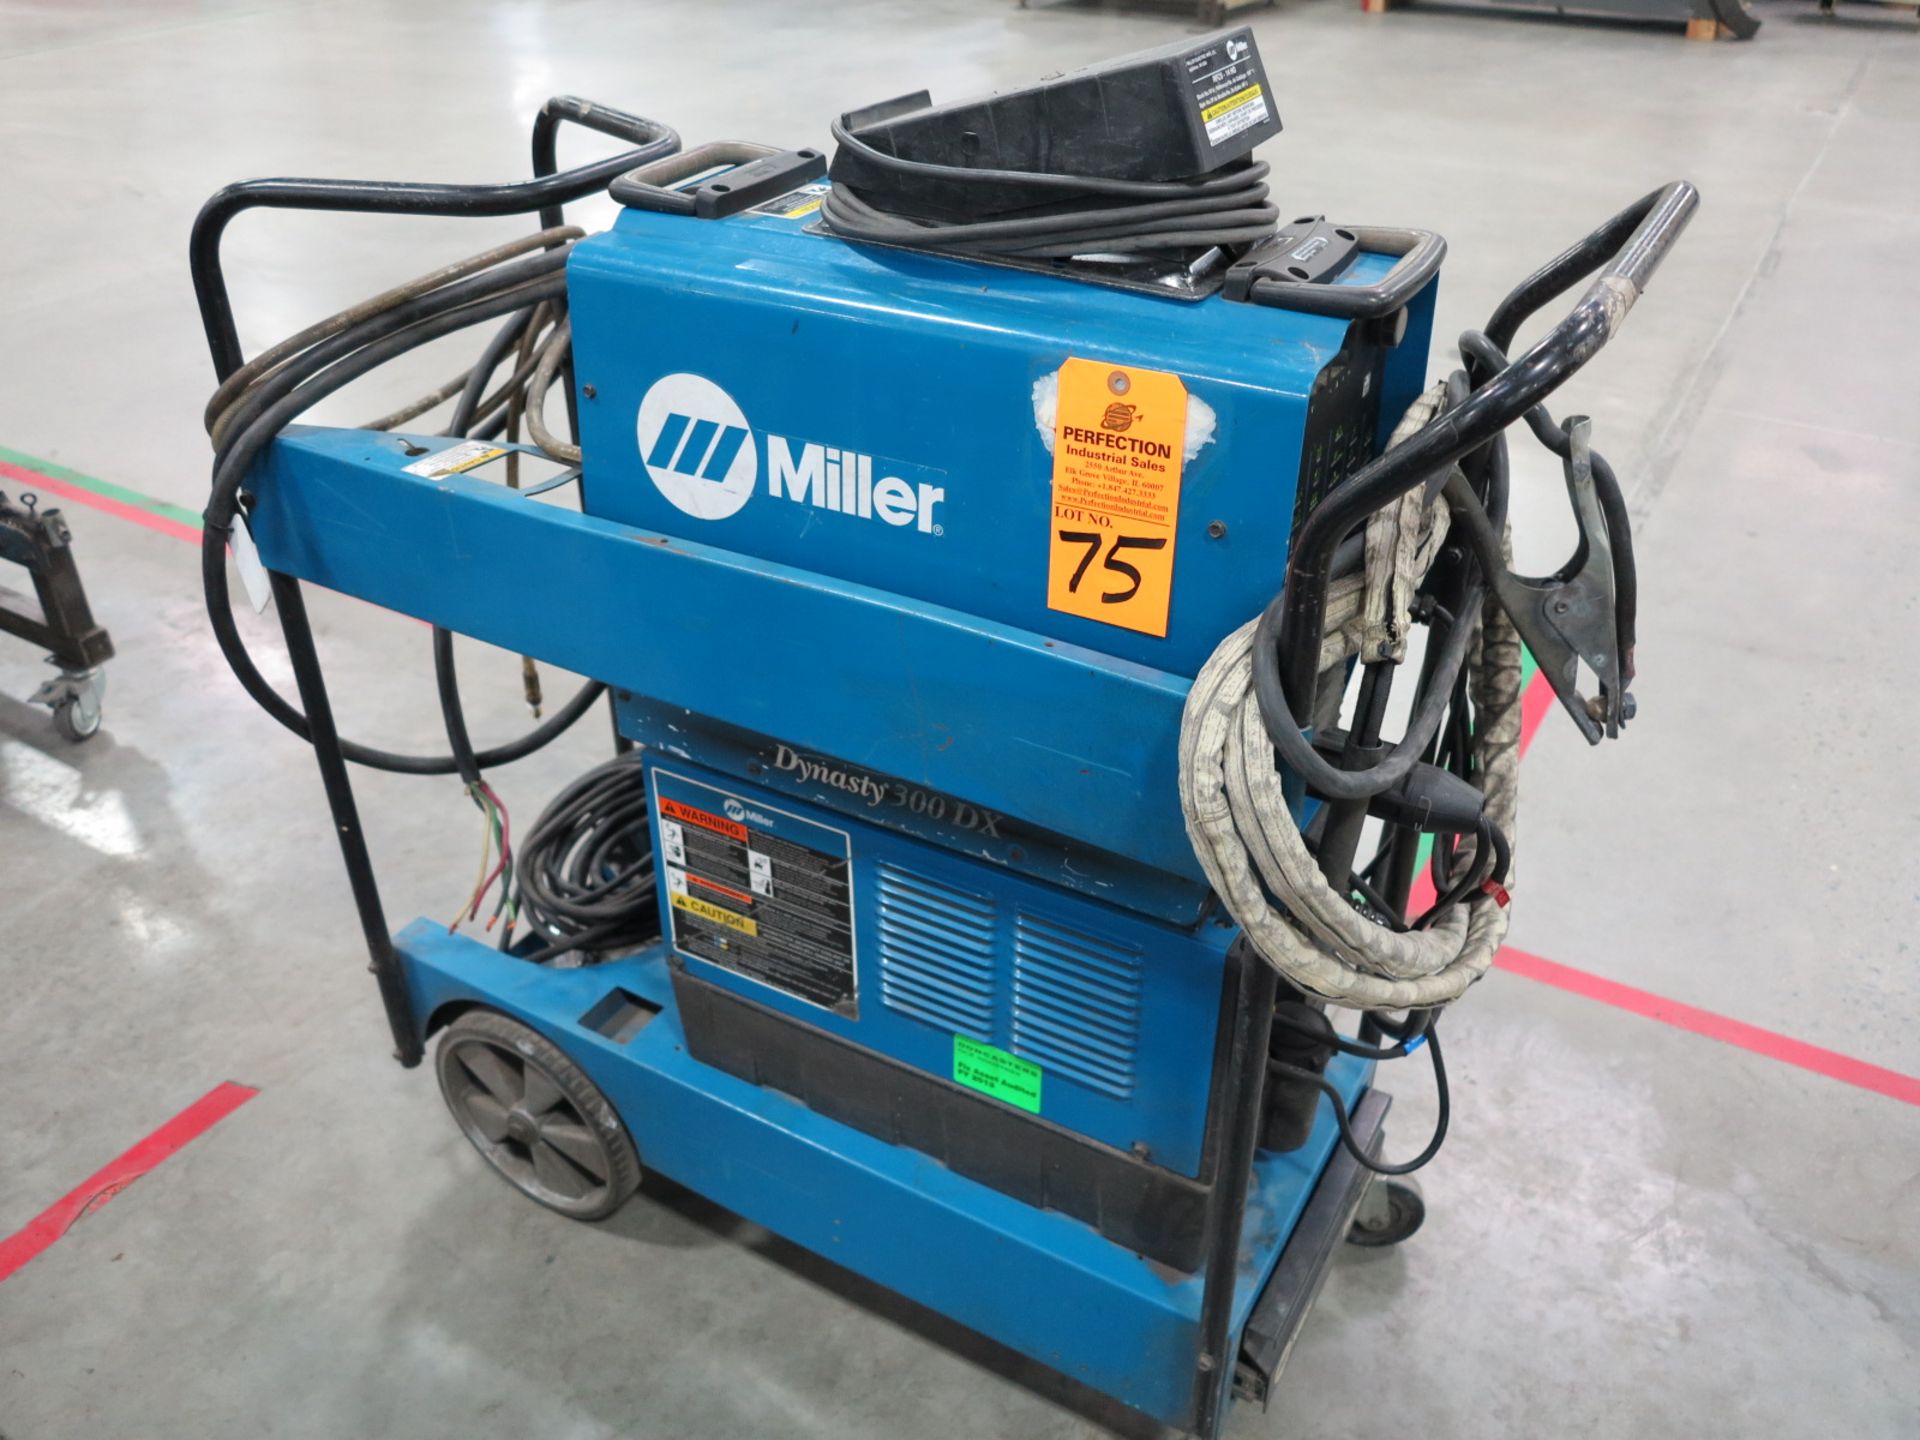 MILLER Dynasty 300DX Power Source, s/n na, w/ Miller Chiller on Miller TIG Runner Cart